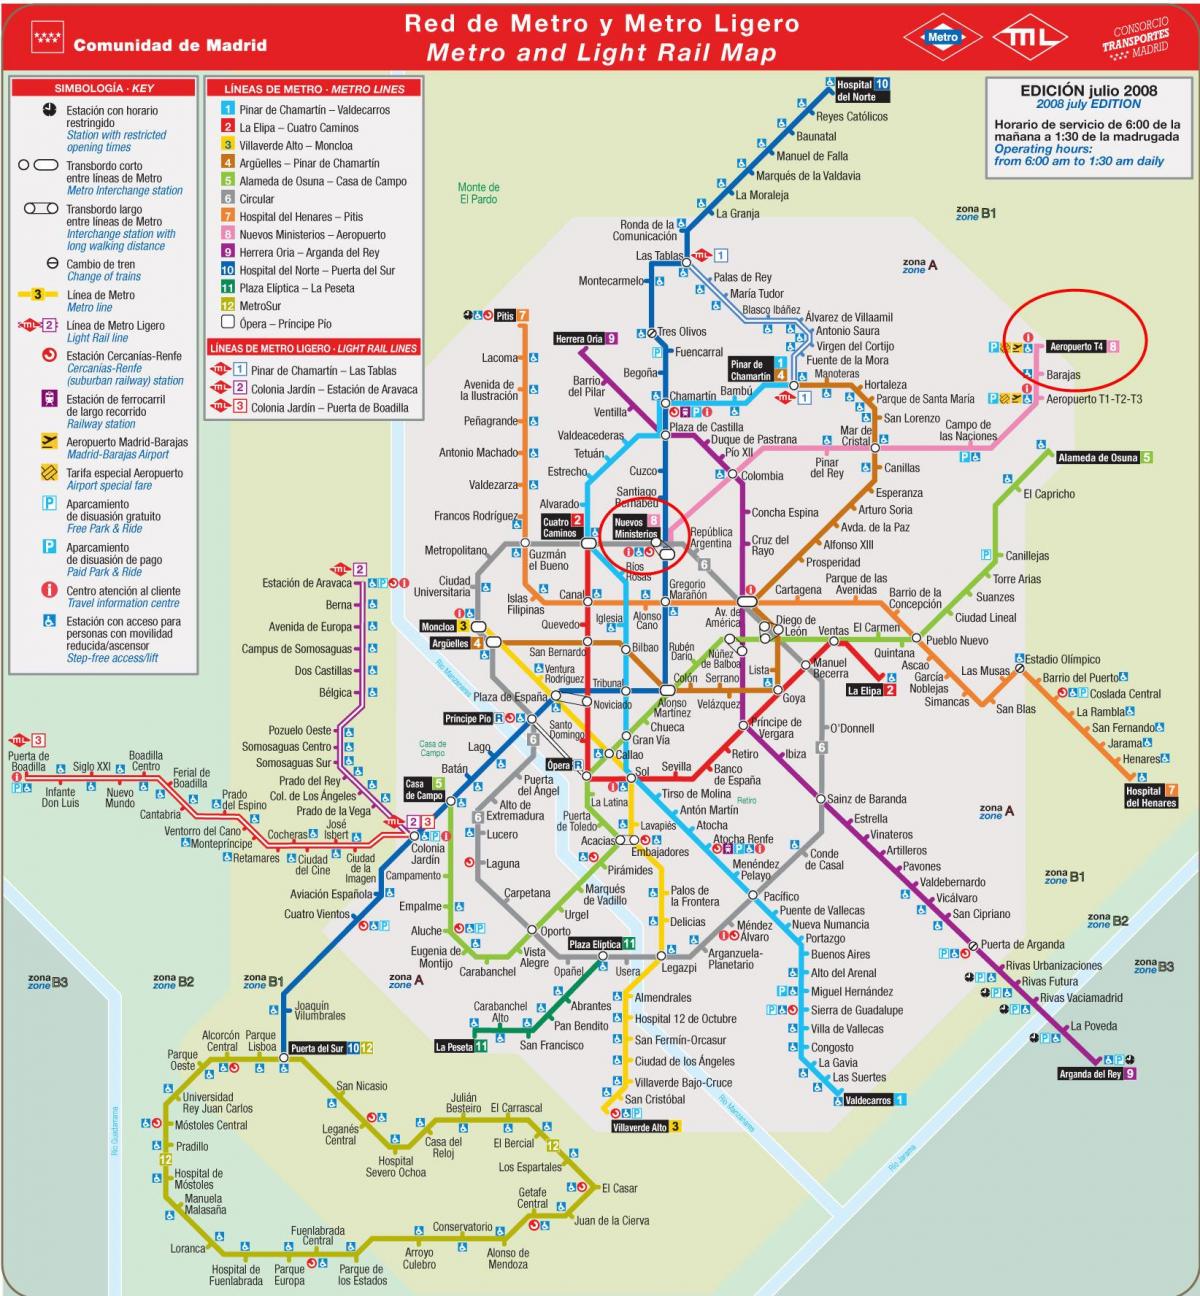 Аеропорт Мадрида схема метро 